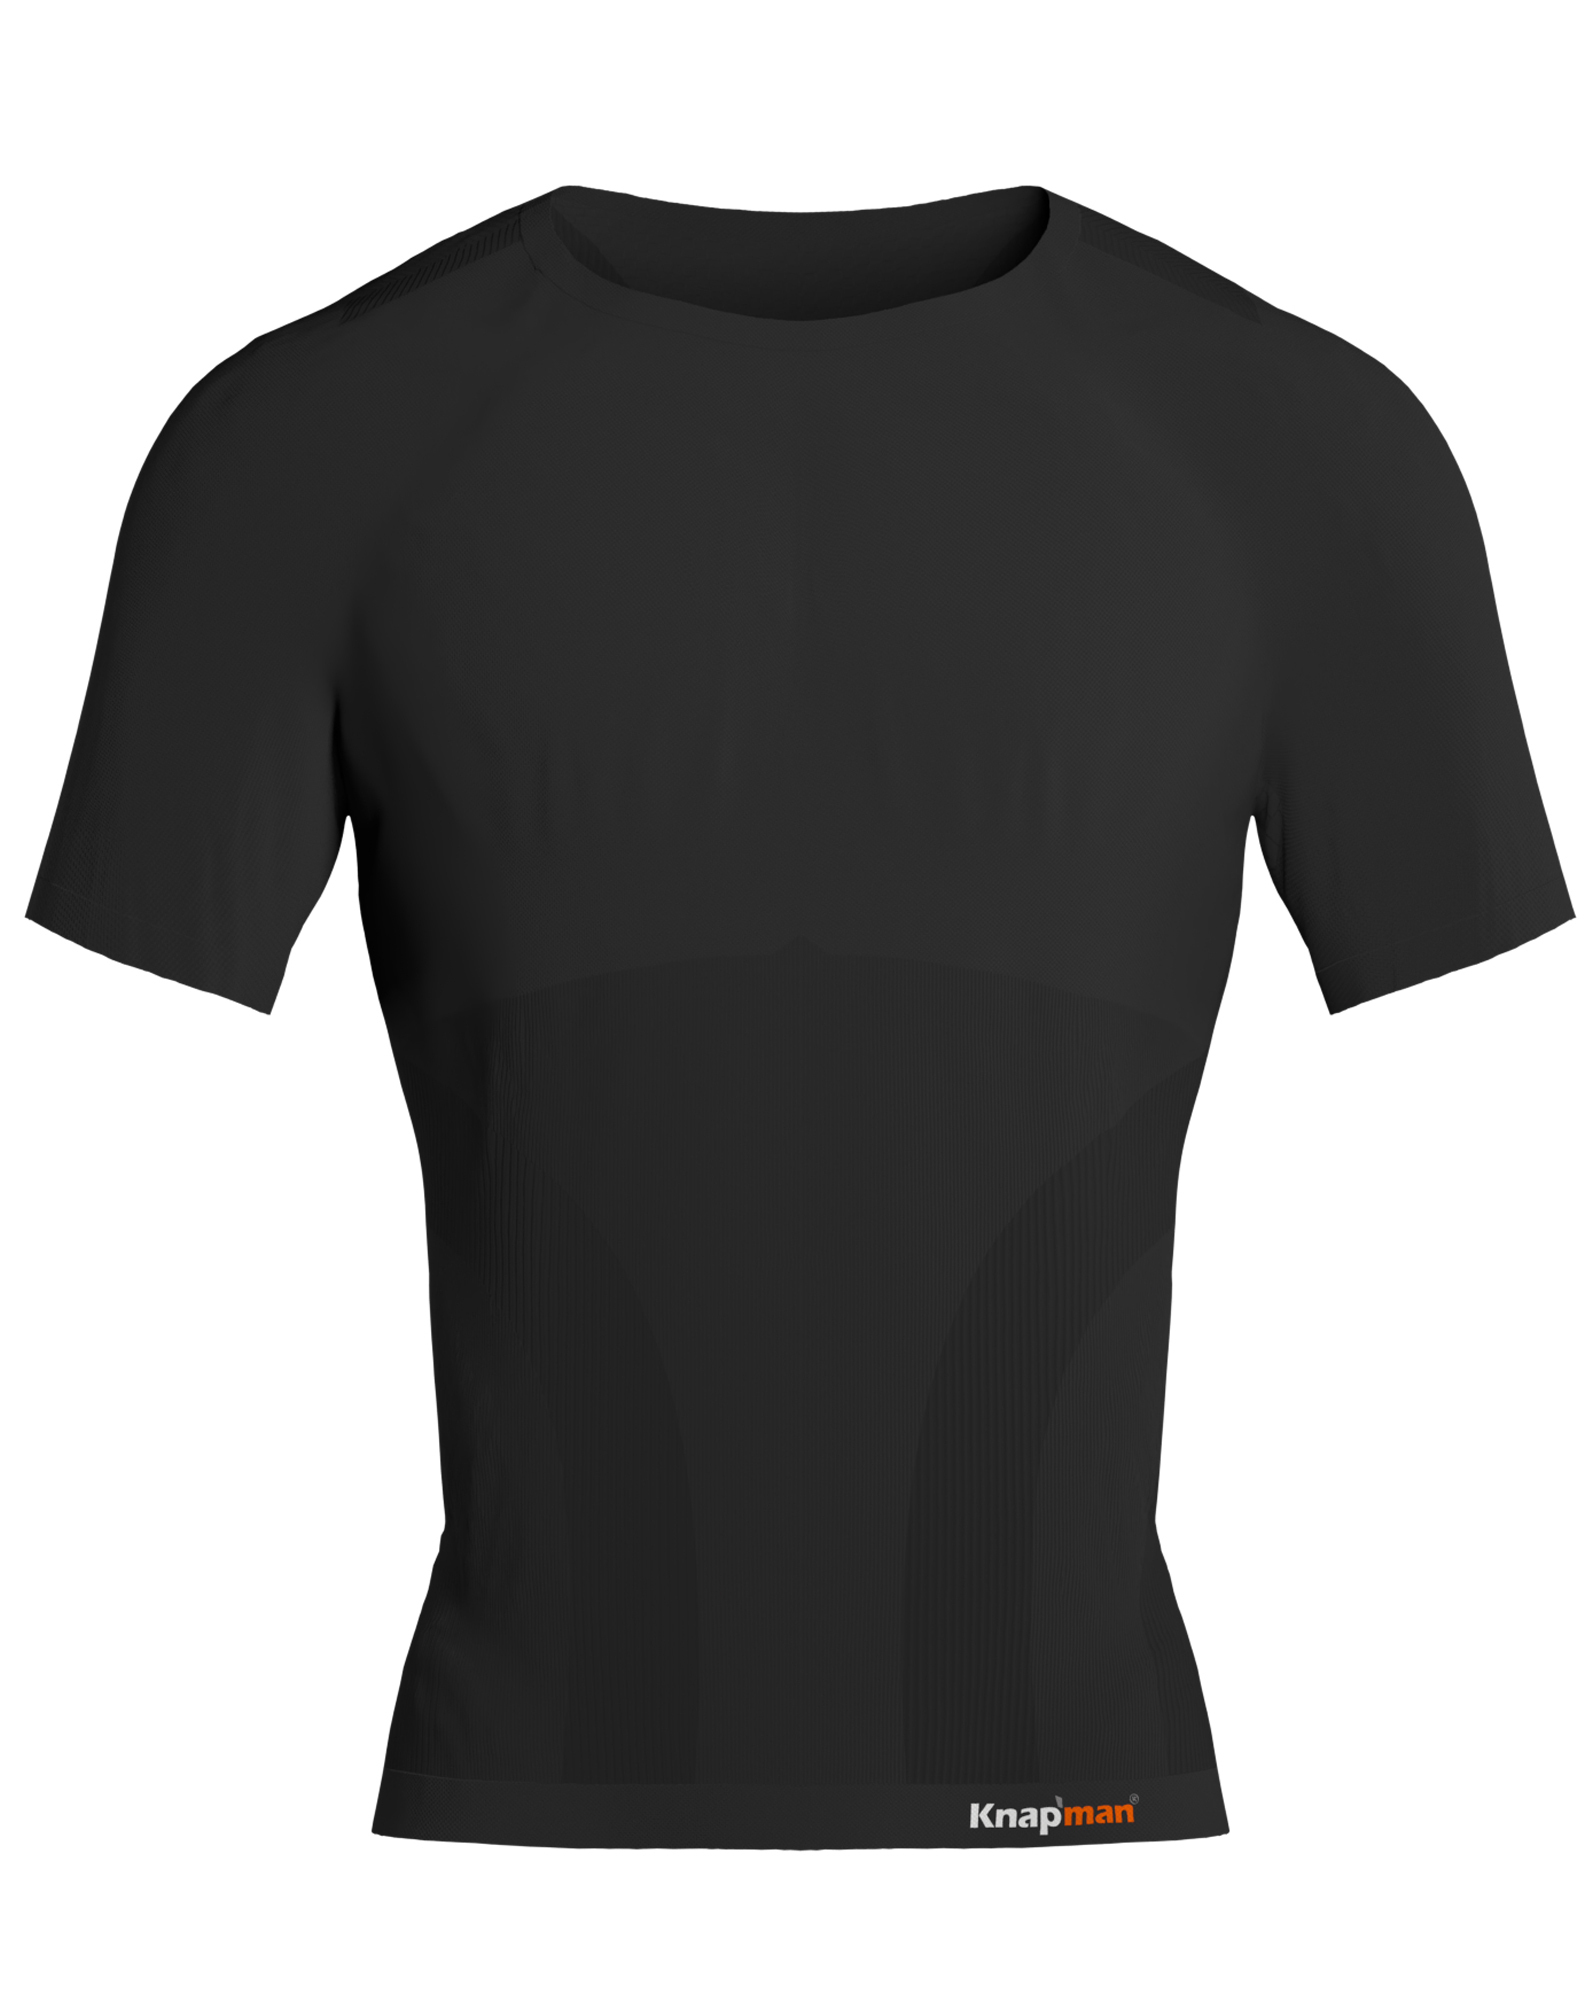 https://www.knapman.co.uk/product/351-large-knapman-pro-performance-compression-baselayer-shirt-short-sleeve-black.jpg